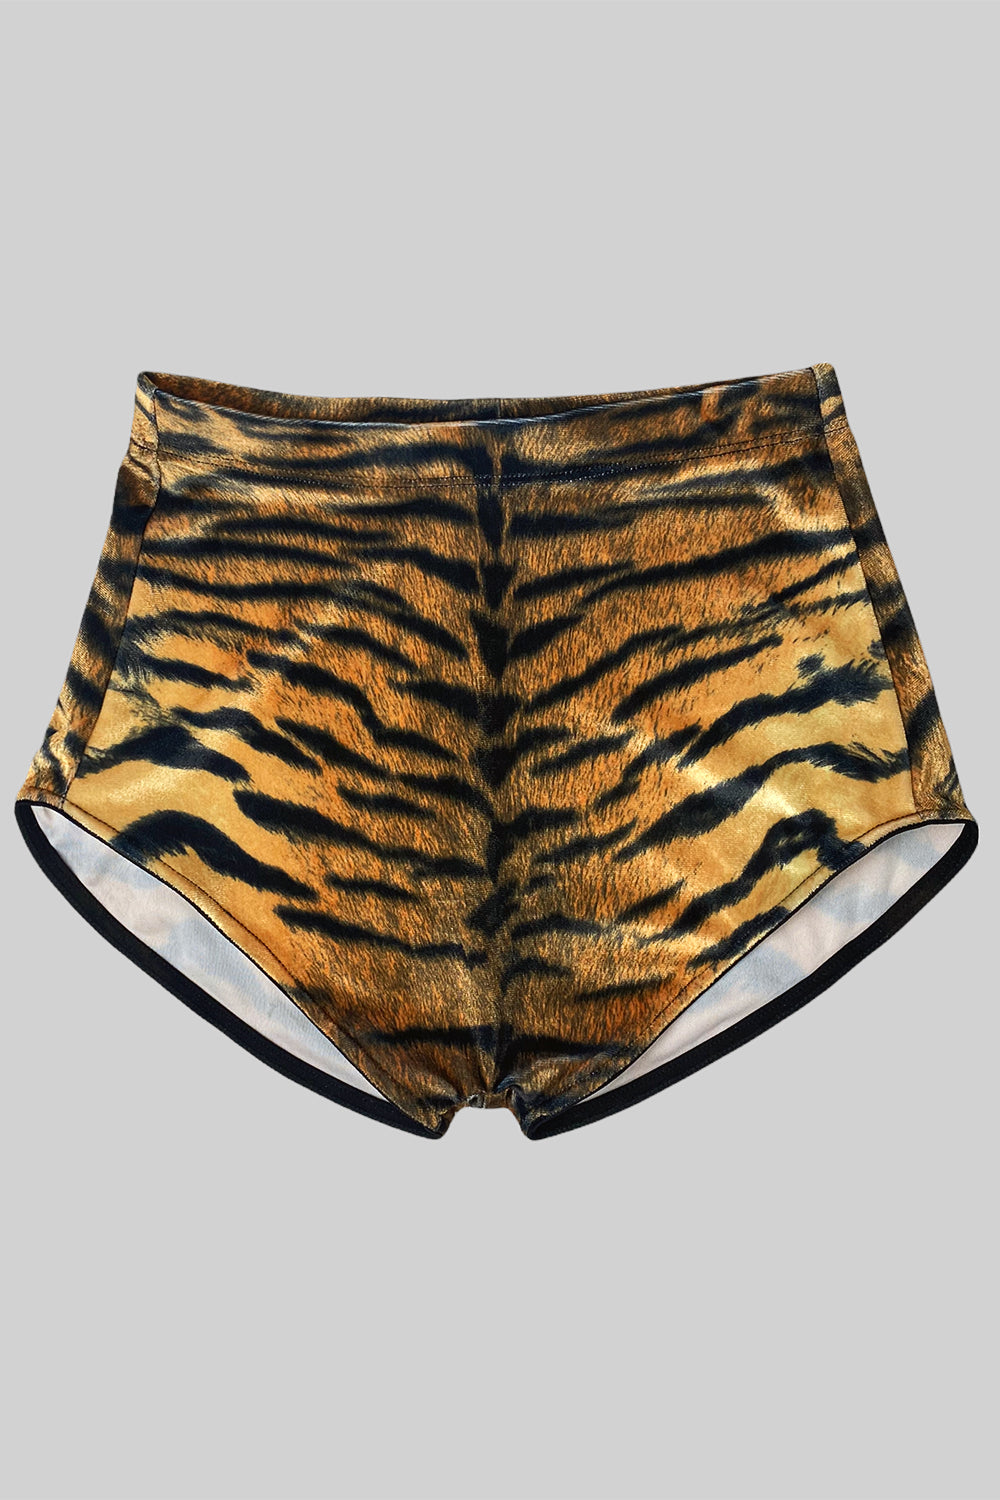 Tiger Velvet Hot Shorts | Made To Order